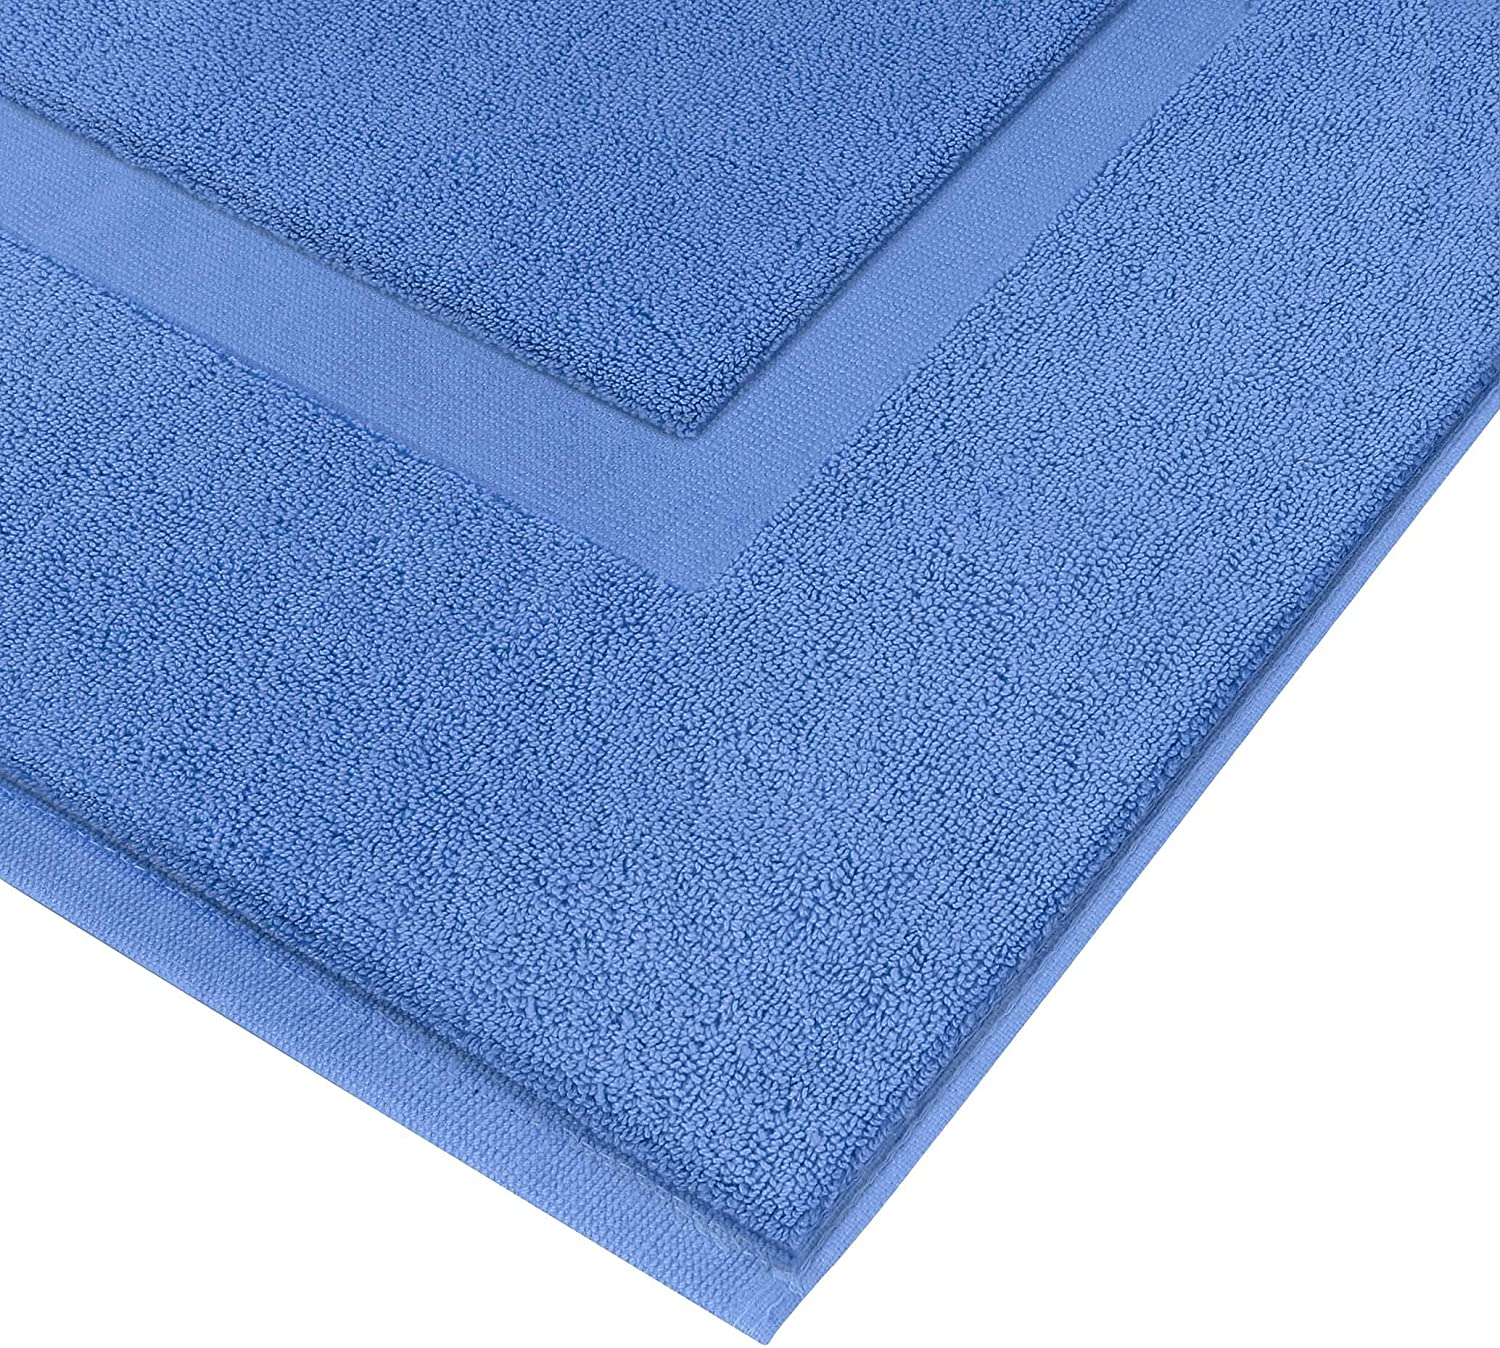 Cotton Banded Bath Mats, Electric Blue [Not a Bathroom Rug] - 53 x 86 cm, 100% Ring Spun Cotton -